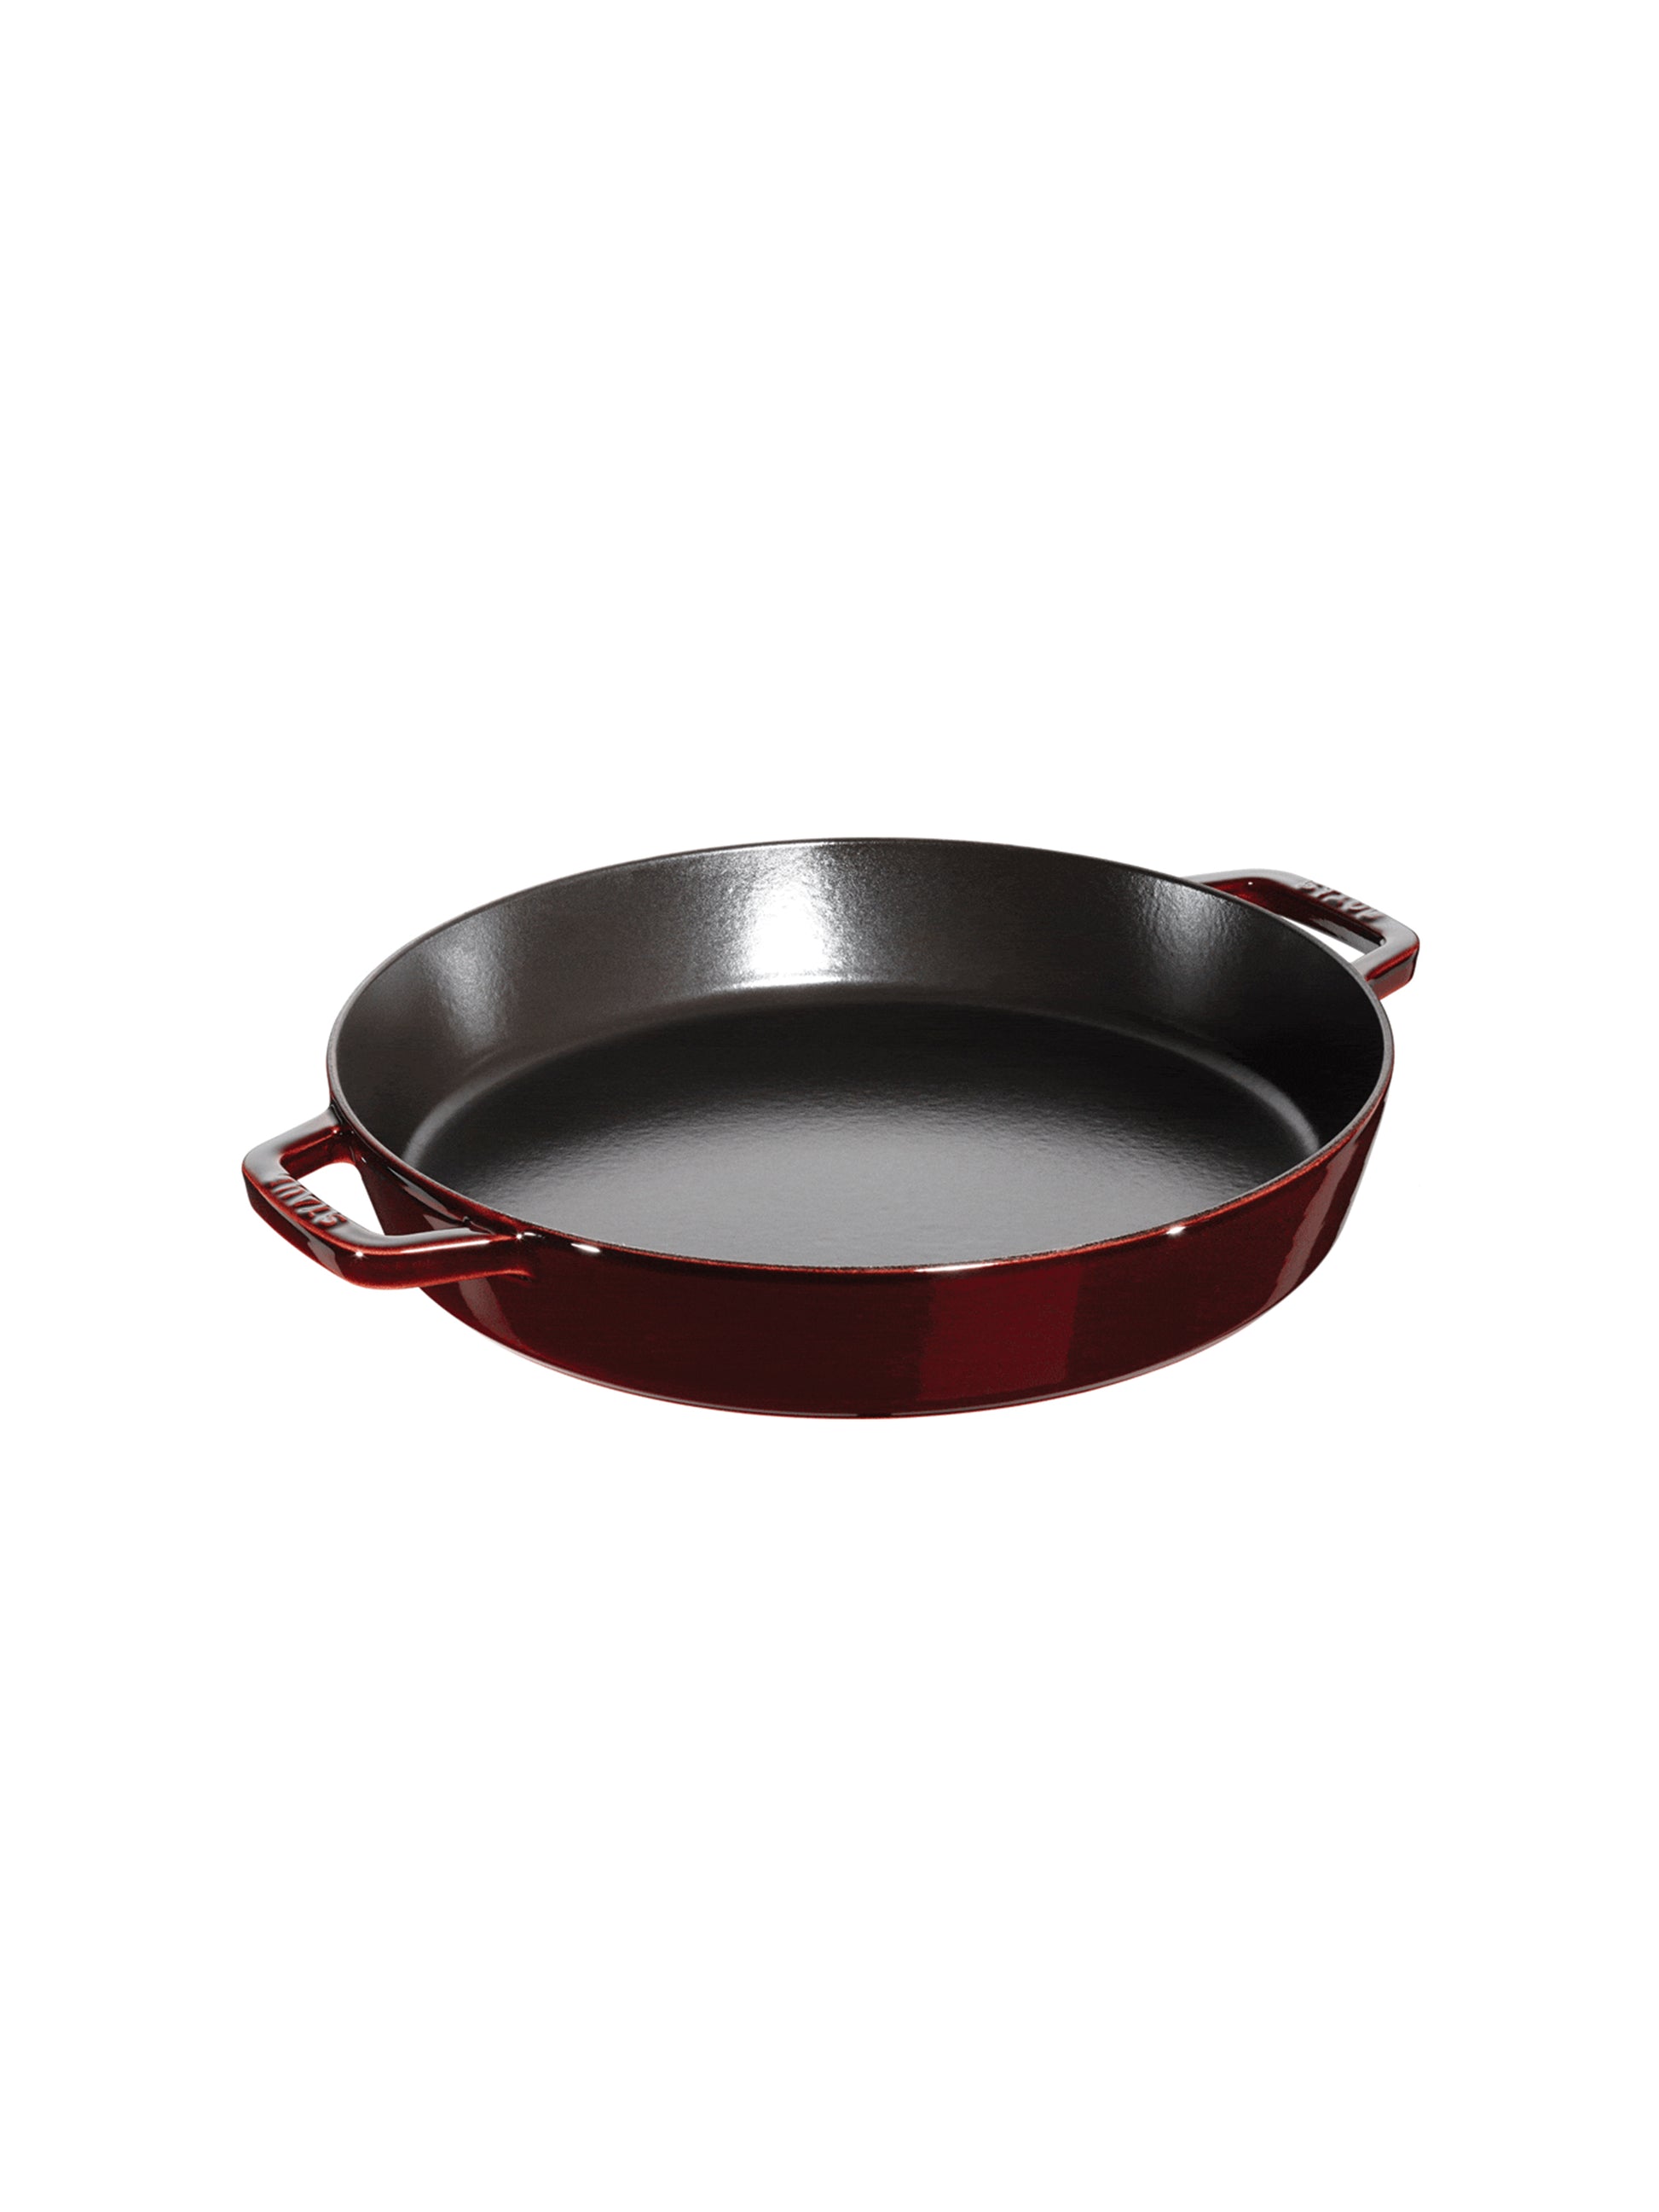 Buy Staub Cast Iron Paella pan